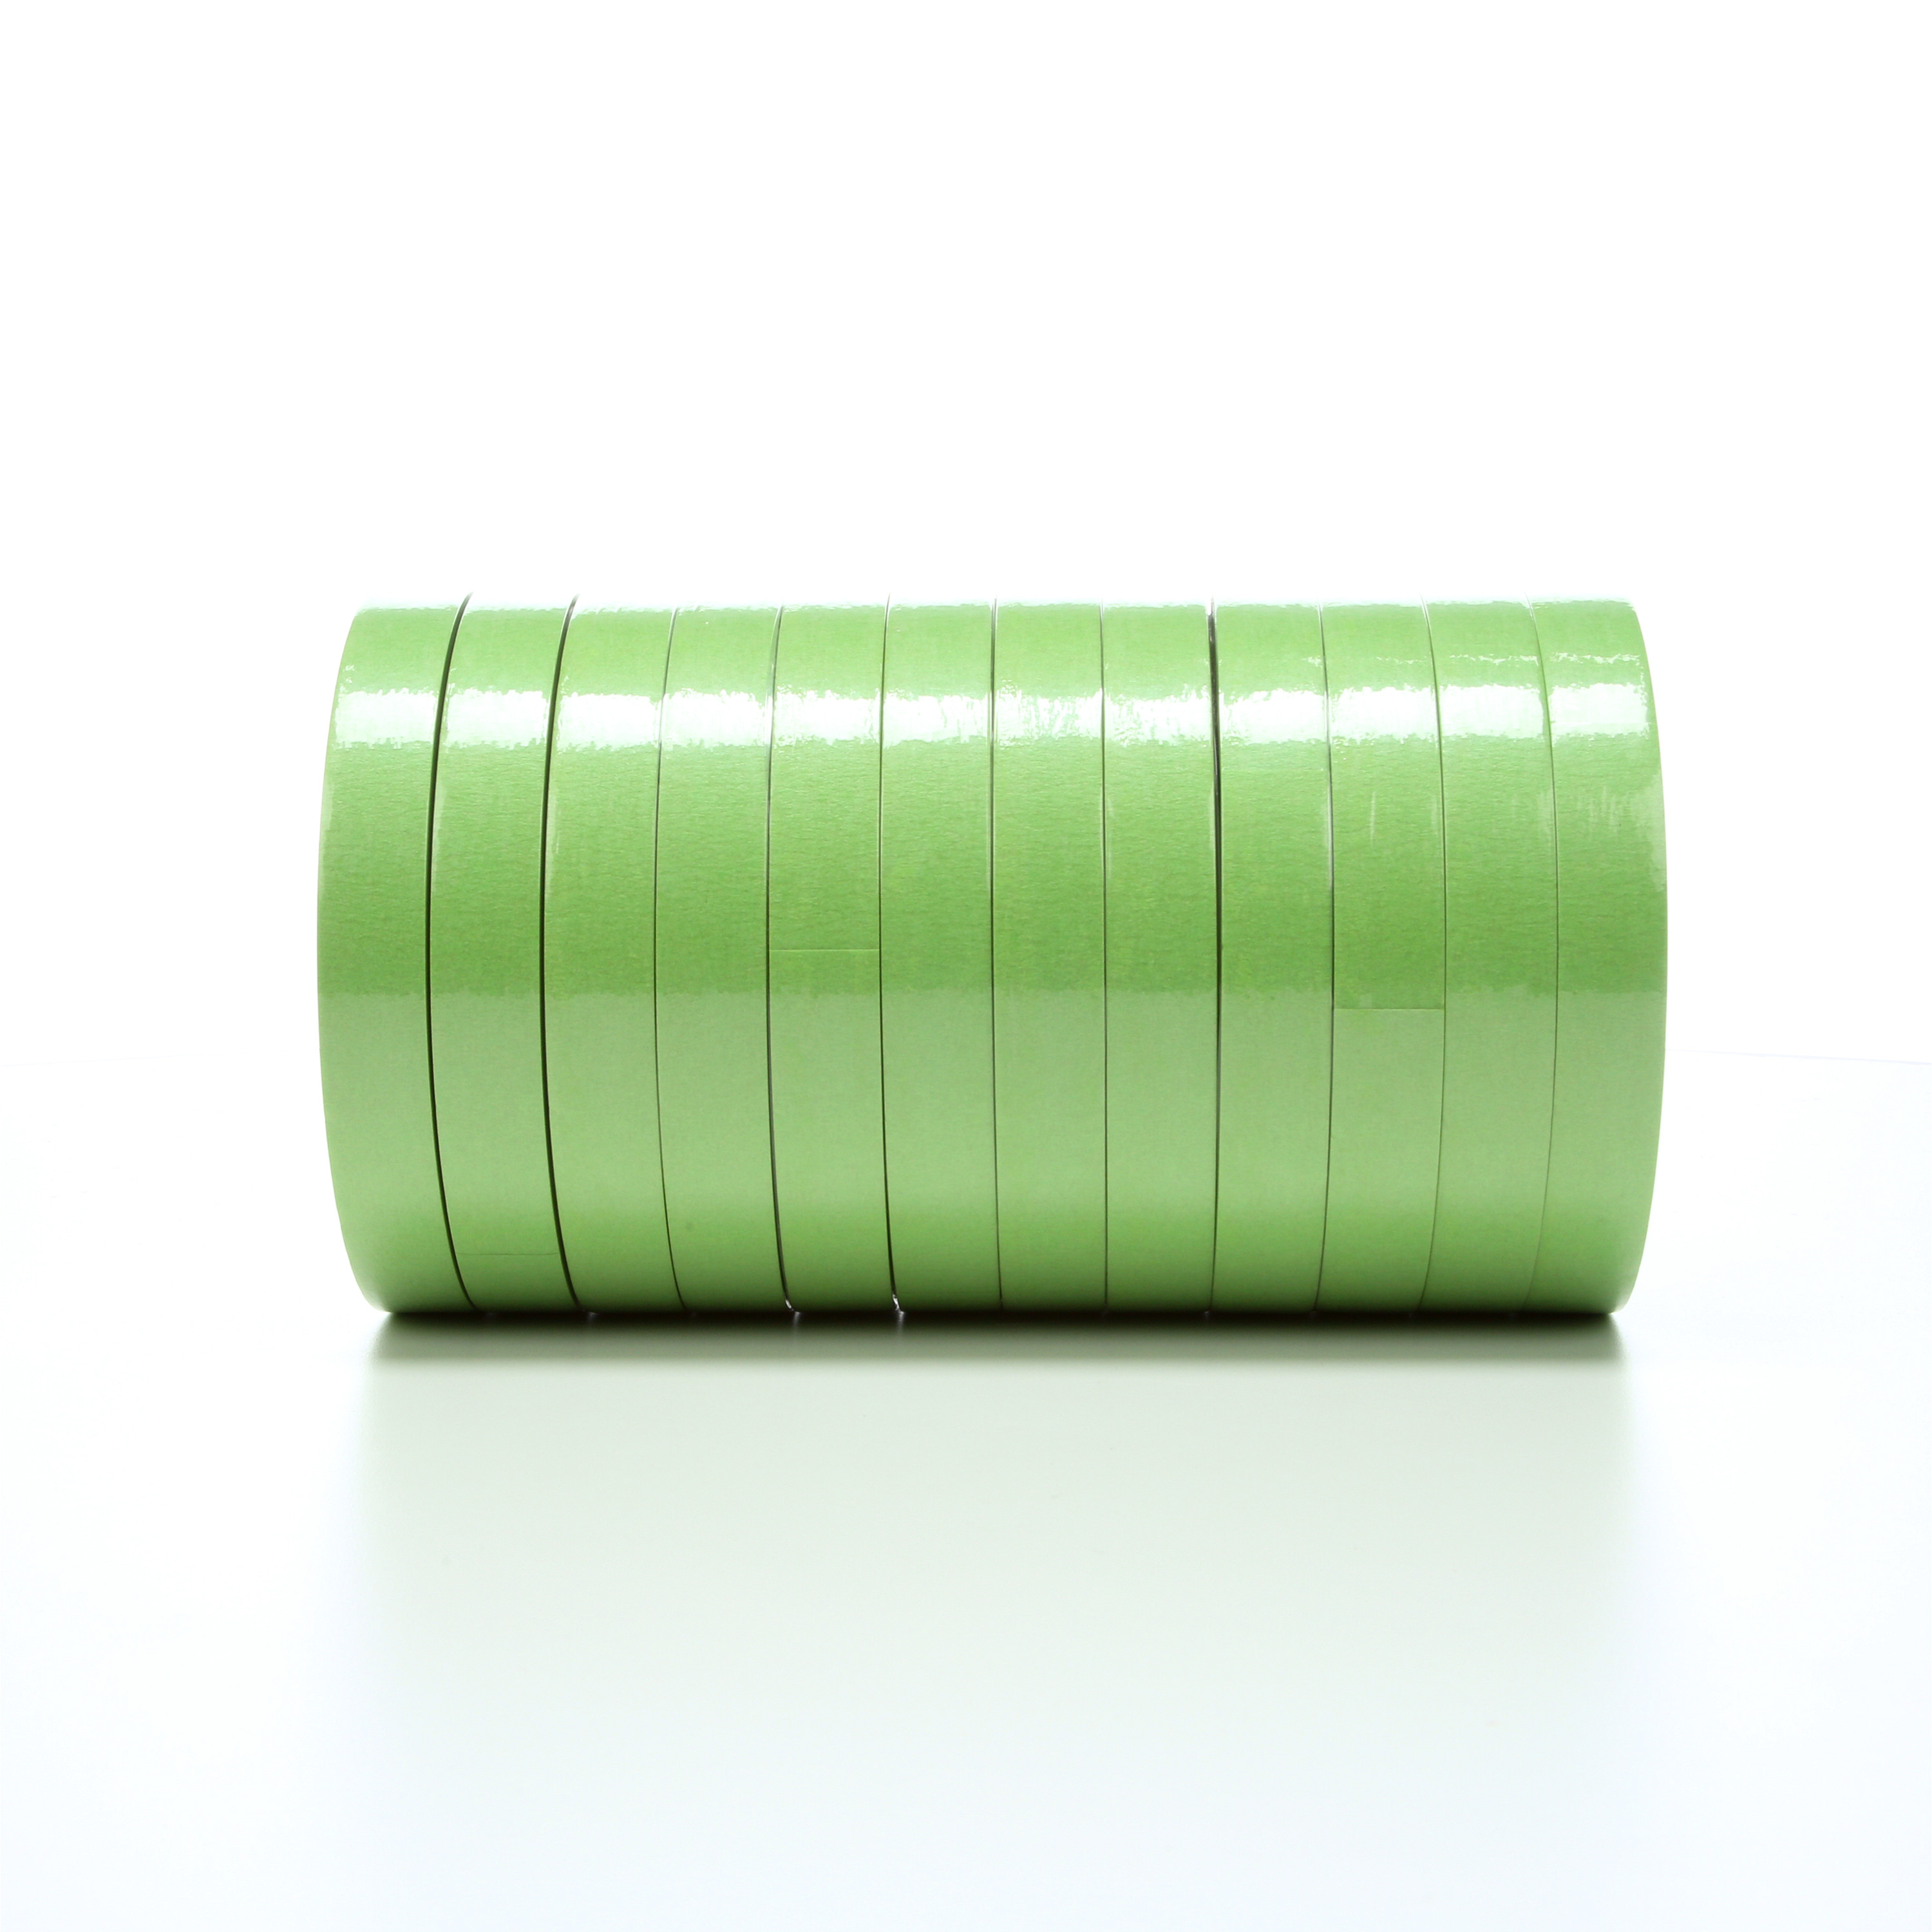 3M™ High Performance Green Masking Tape 401+, 3 mm x 55 m, 248 Roll/Case